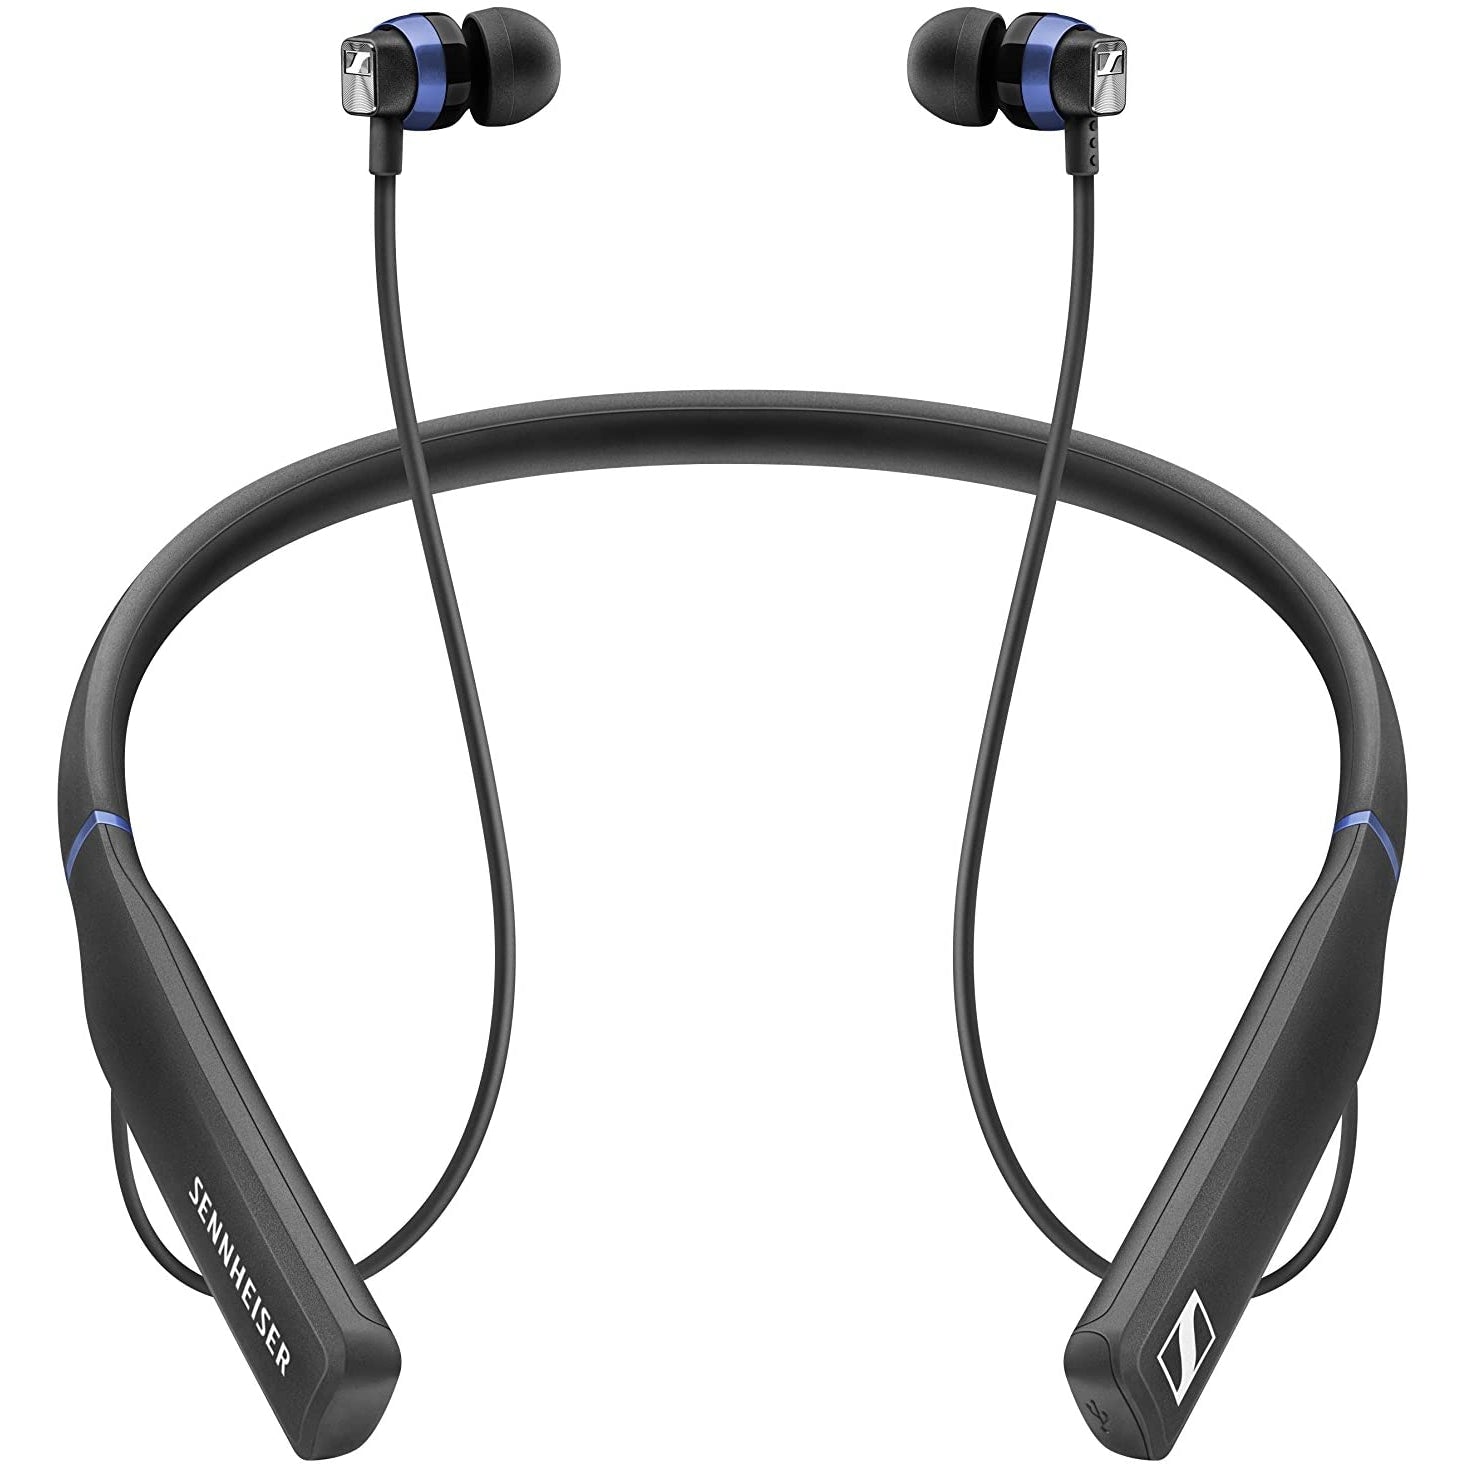 Sennheiser CX 7.00BT In-Ear Wireless Headphones - Black